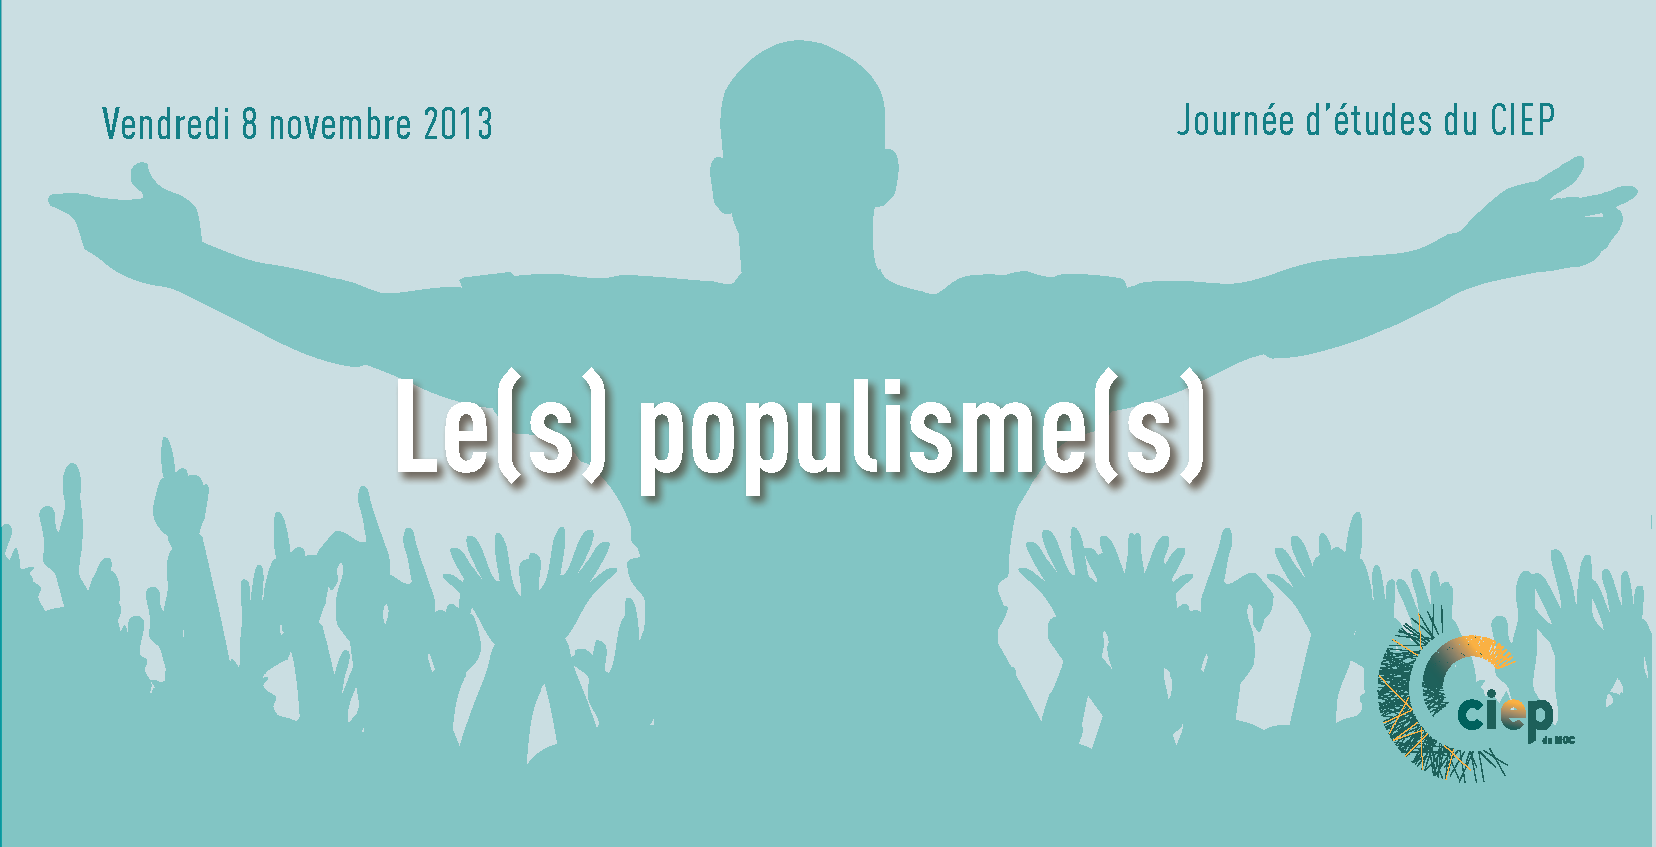 j etude populisme-2013